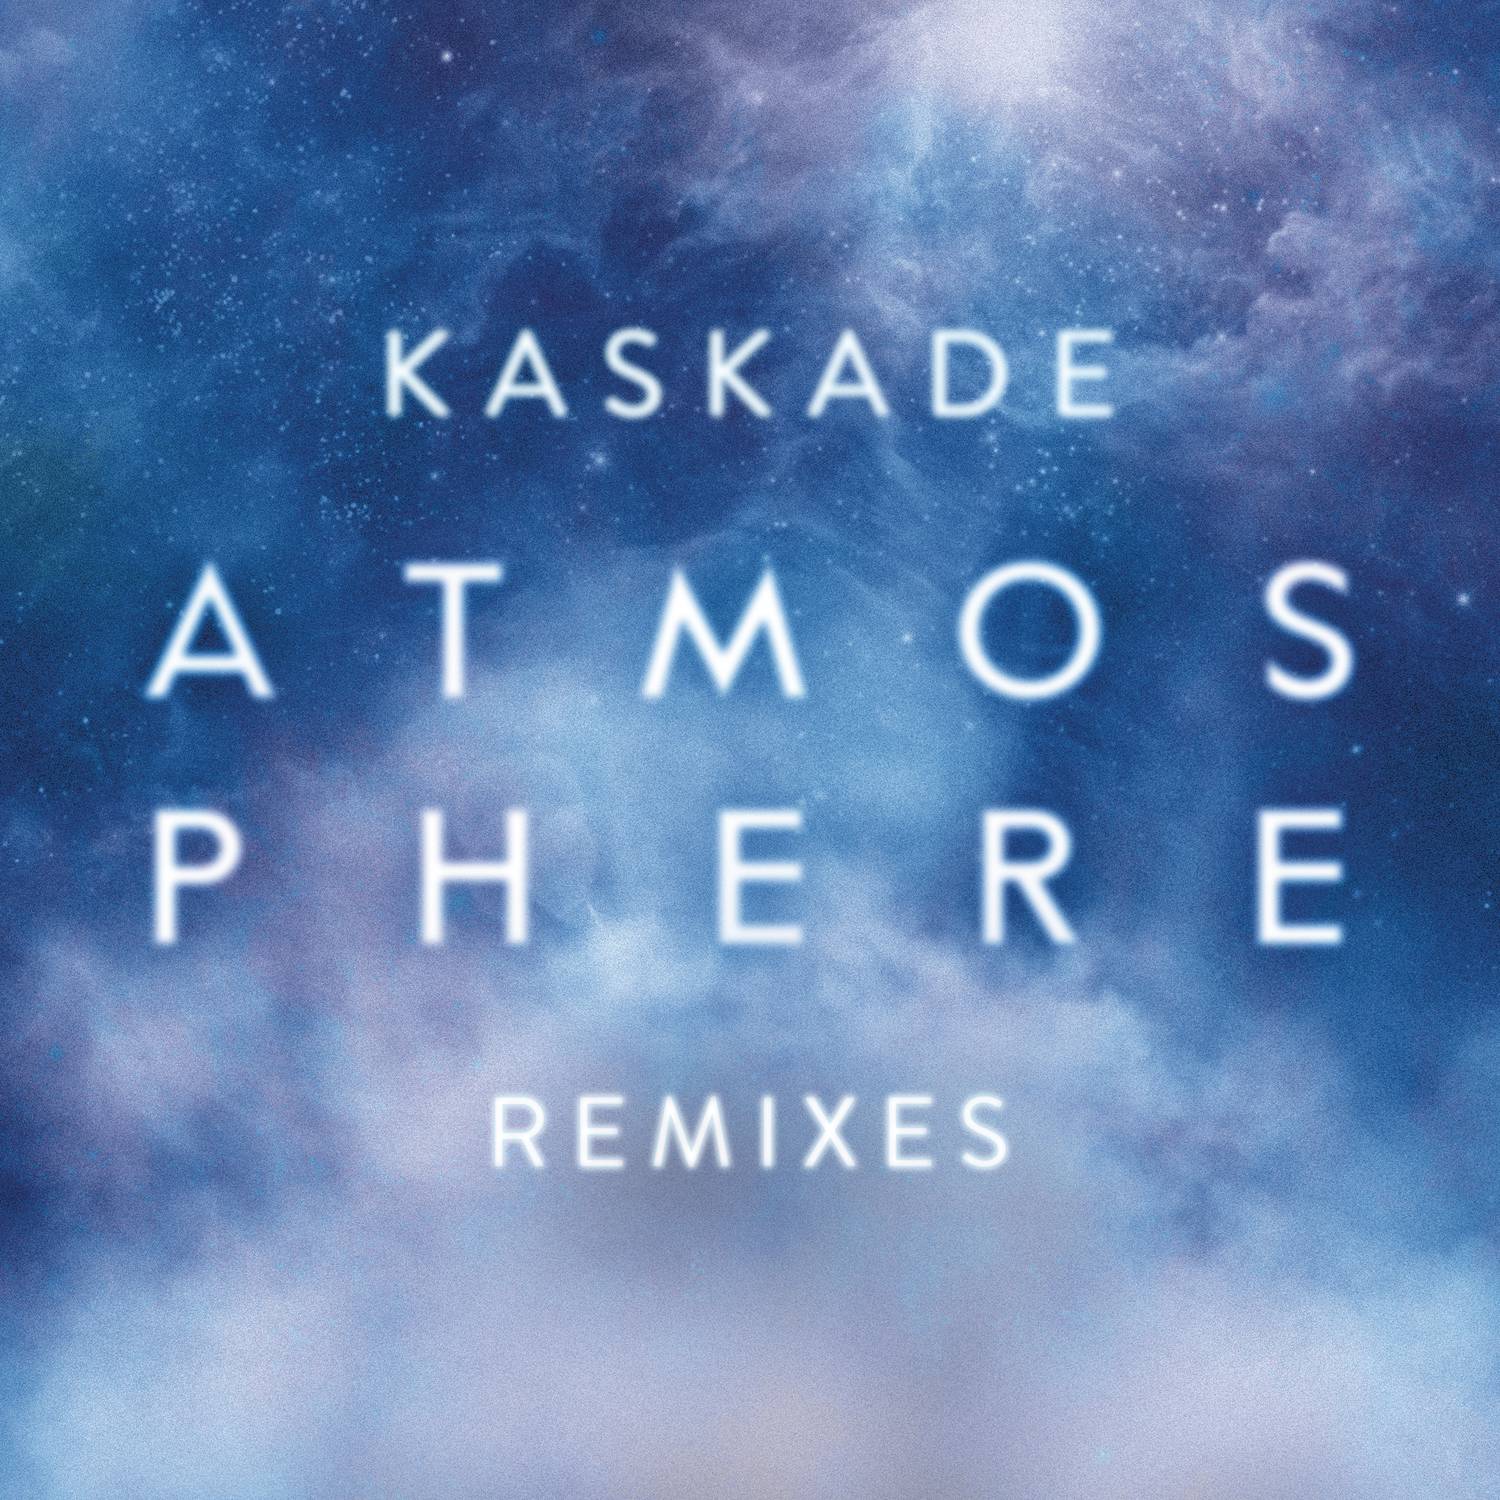 Atmosphere (Remixes)